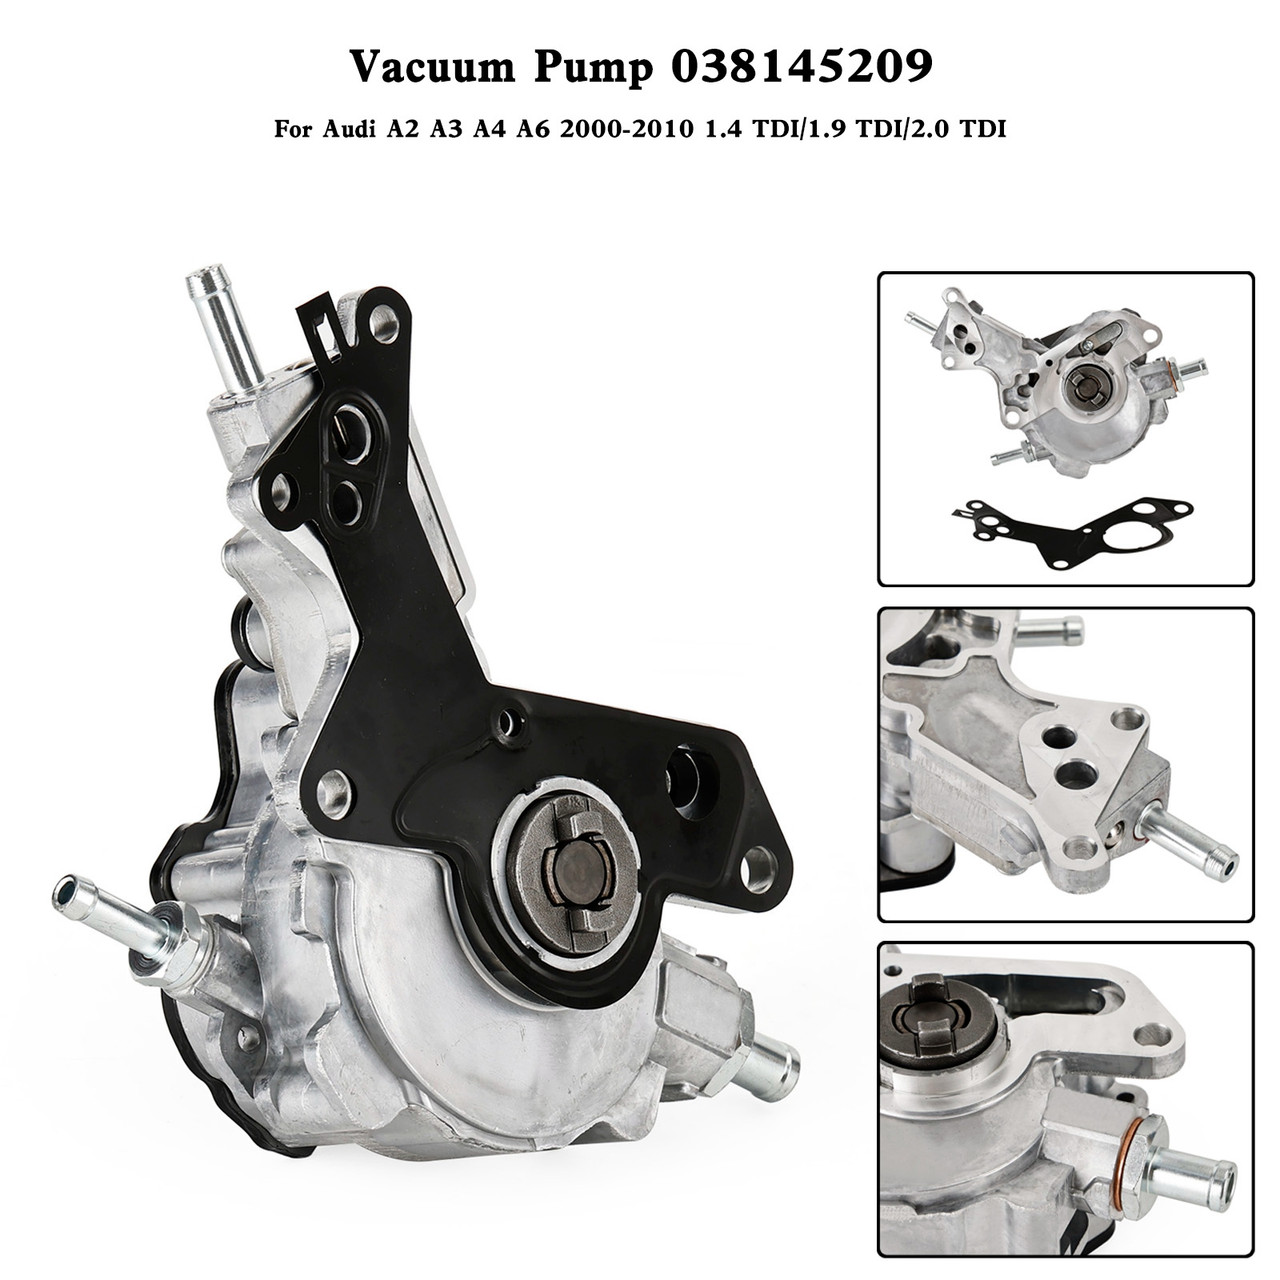 Vacuum Pump 038145209 For Audi A2 A3 A4 A6 2000-2010 1.4 TDI/1.9 TDI/2.0 TDI